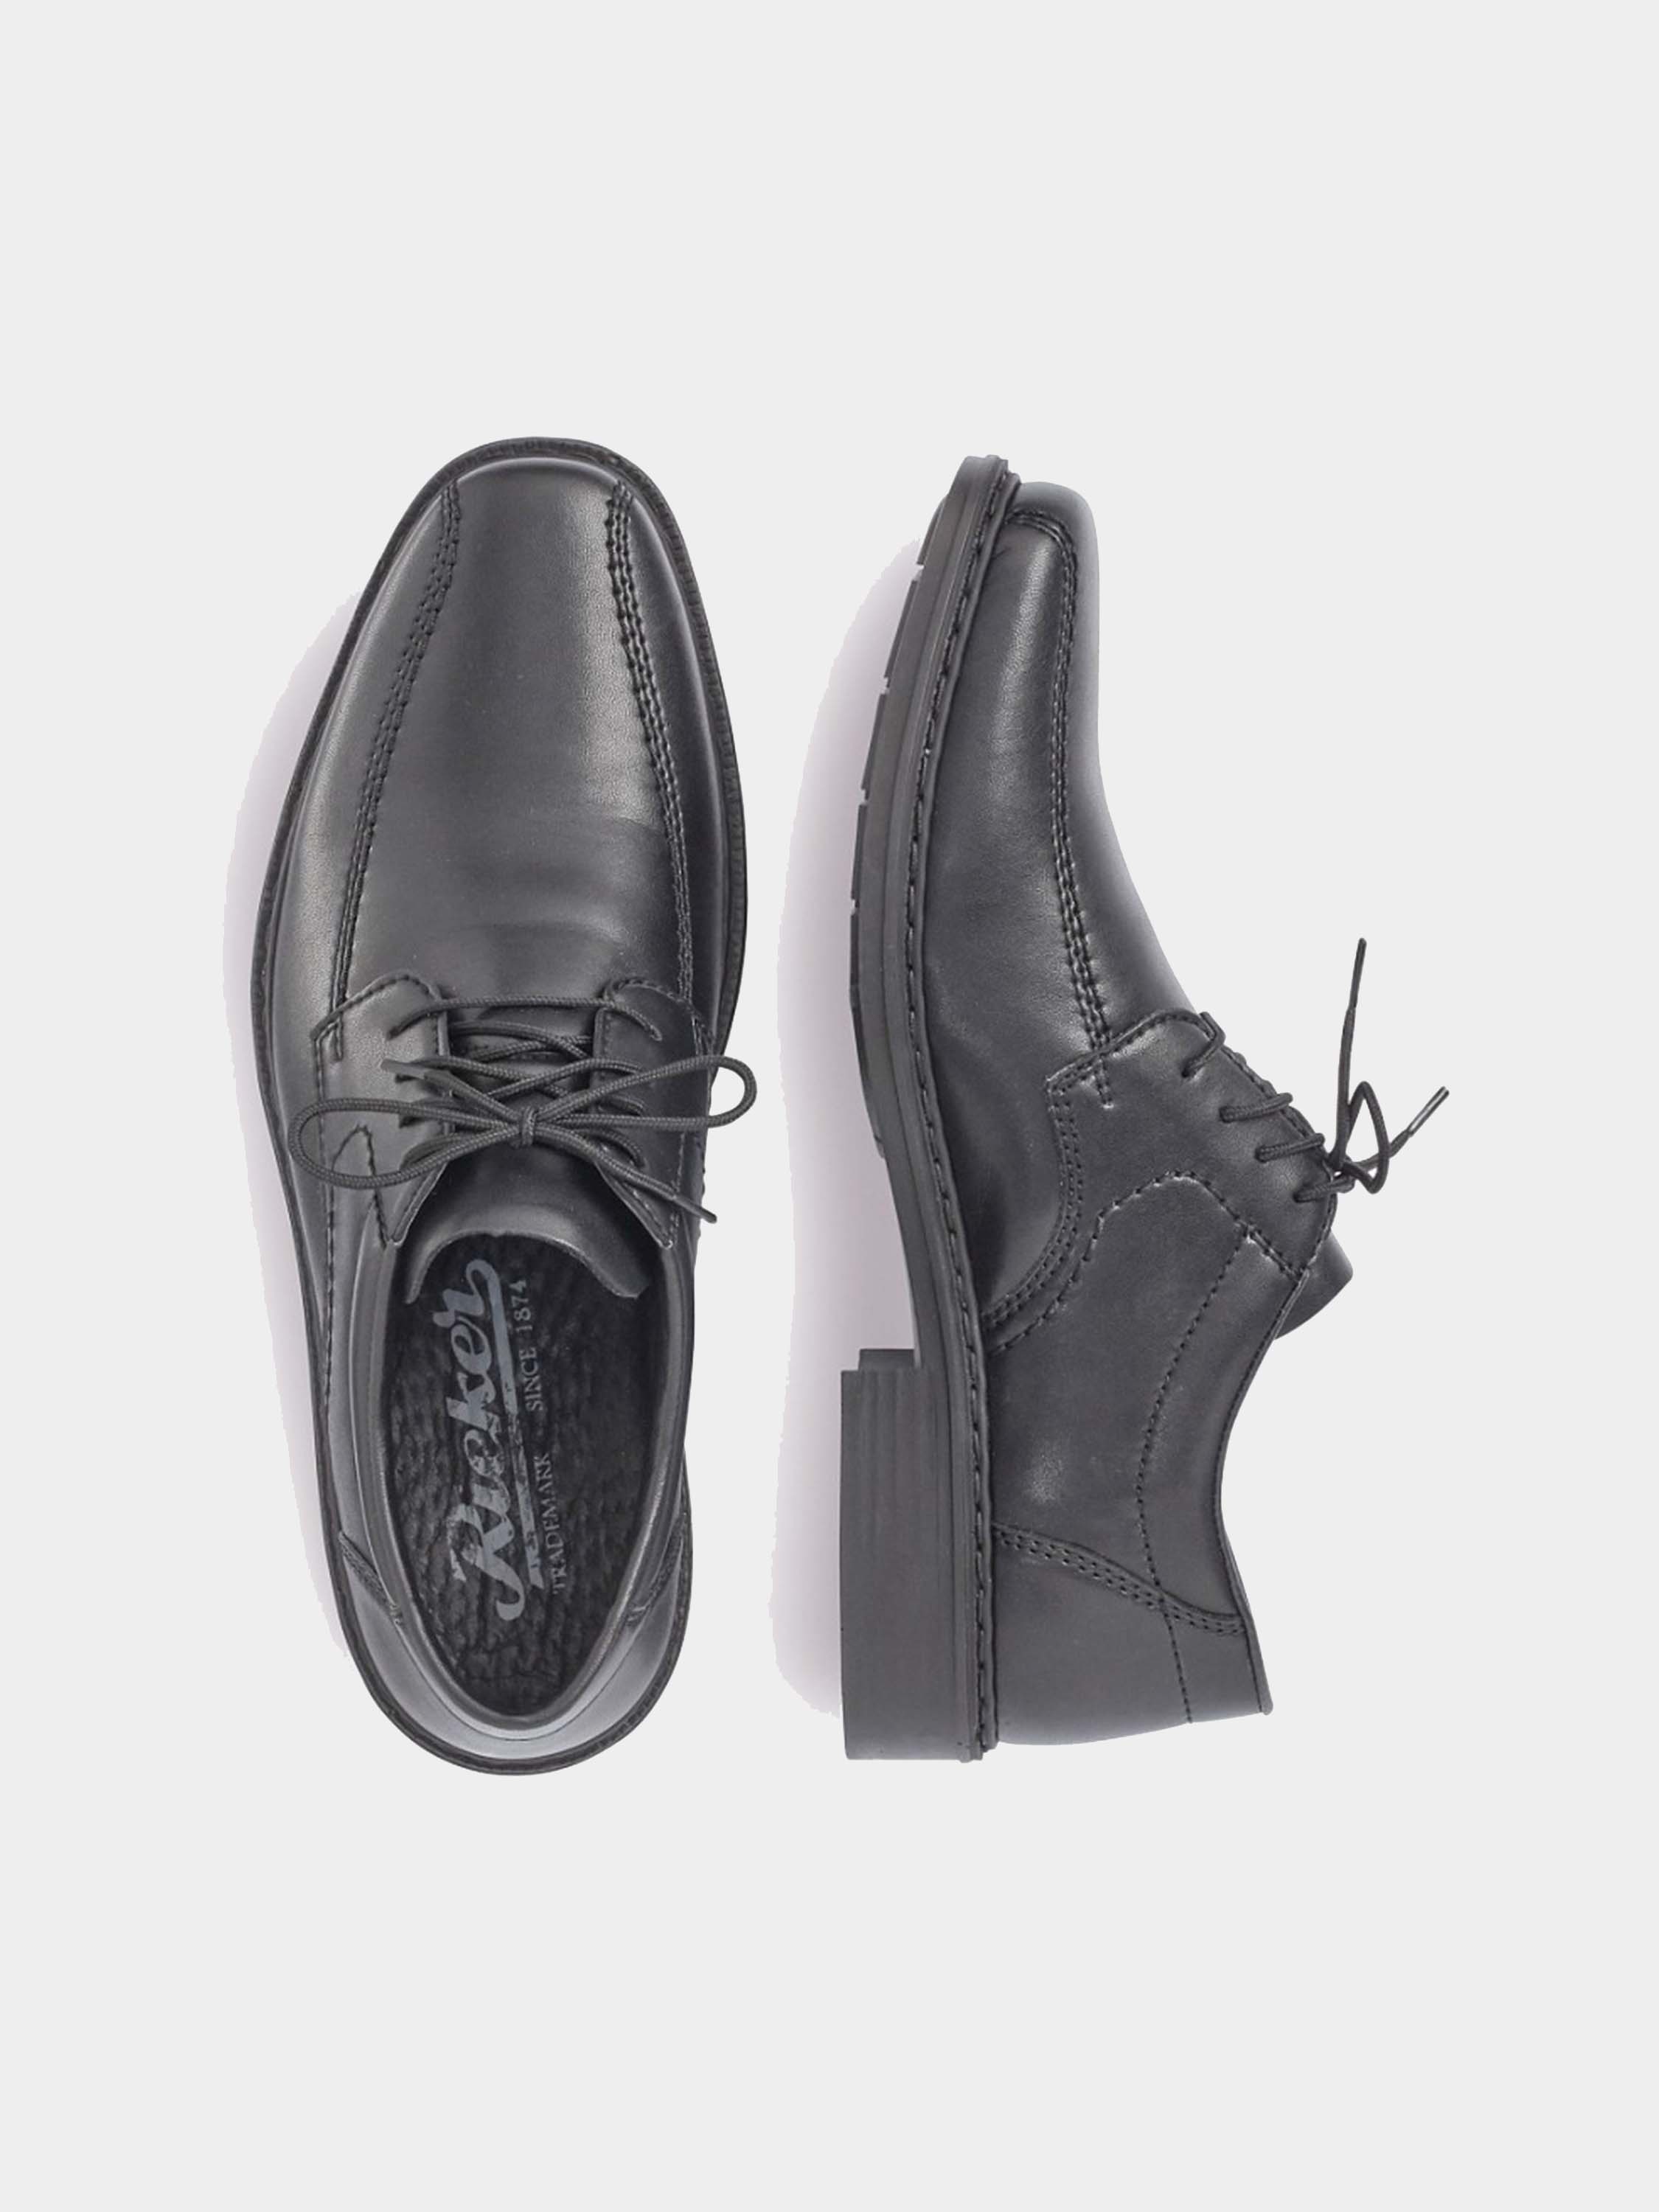 Rieker 14100 Men's Derby Formal Leather Shoes #color_Black